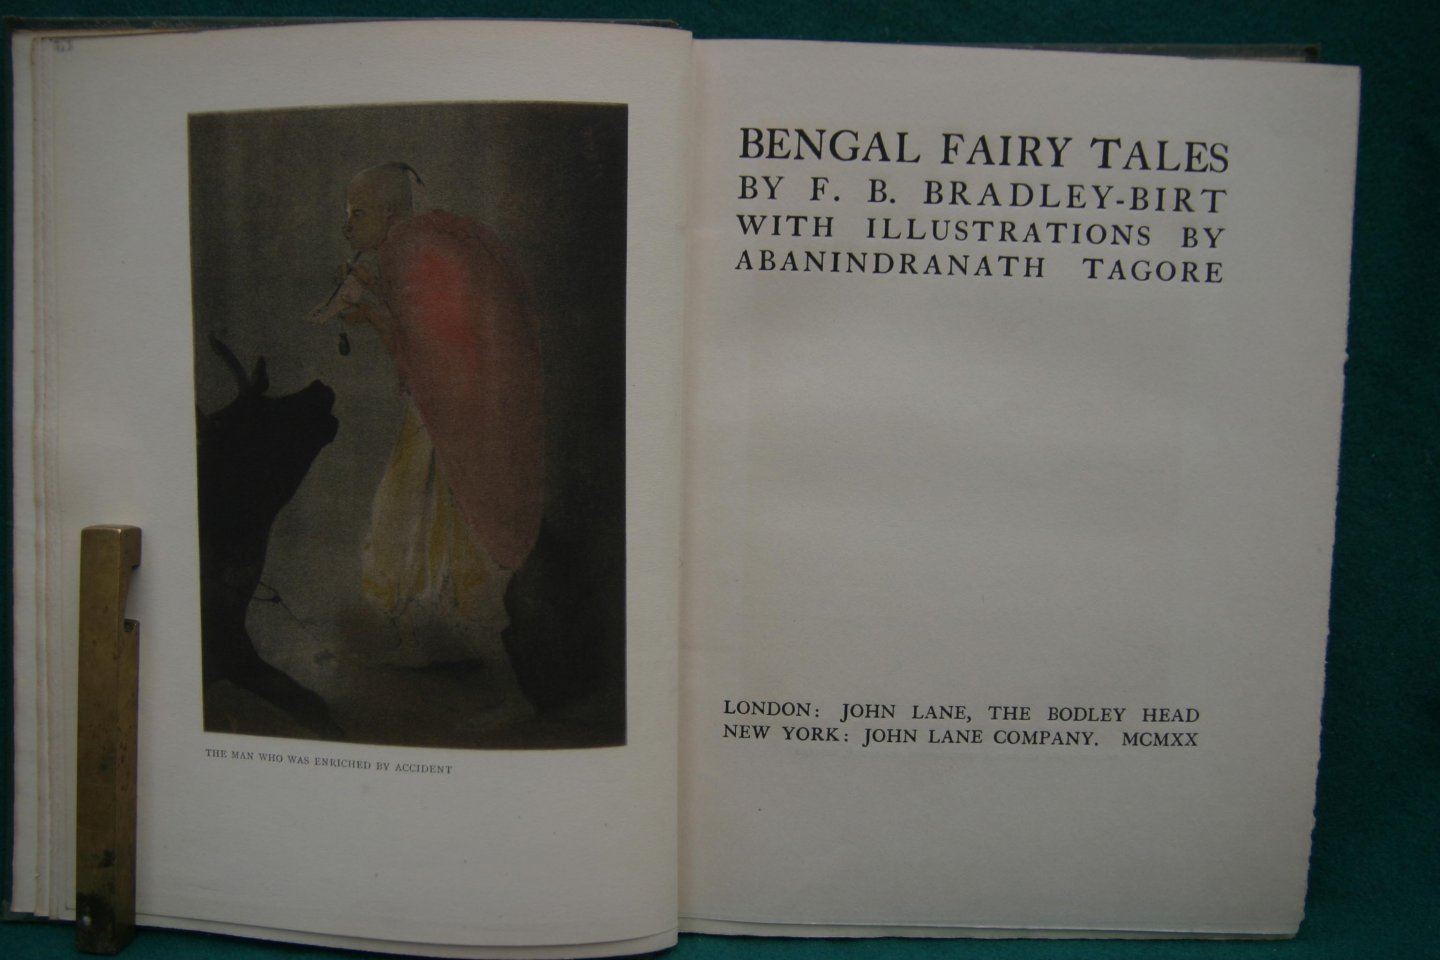 Bradley-Birt - Bengal fairy tales